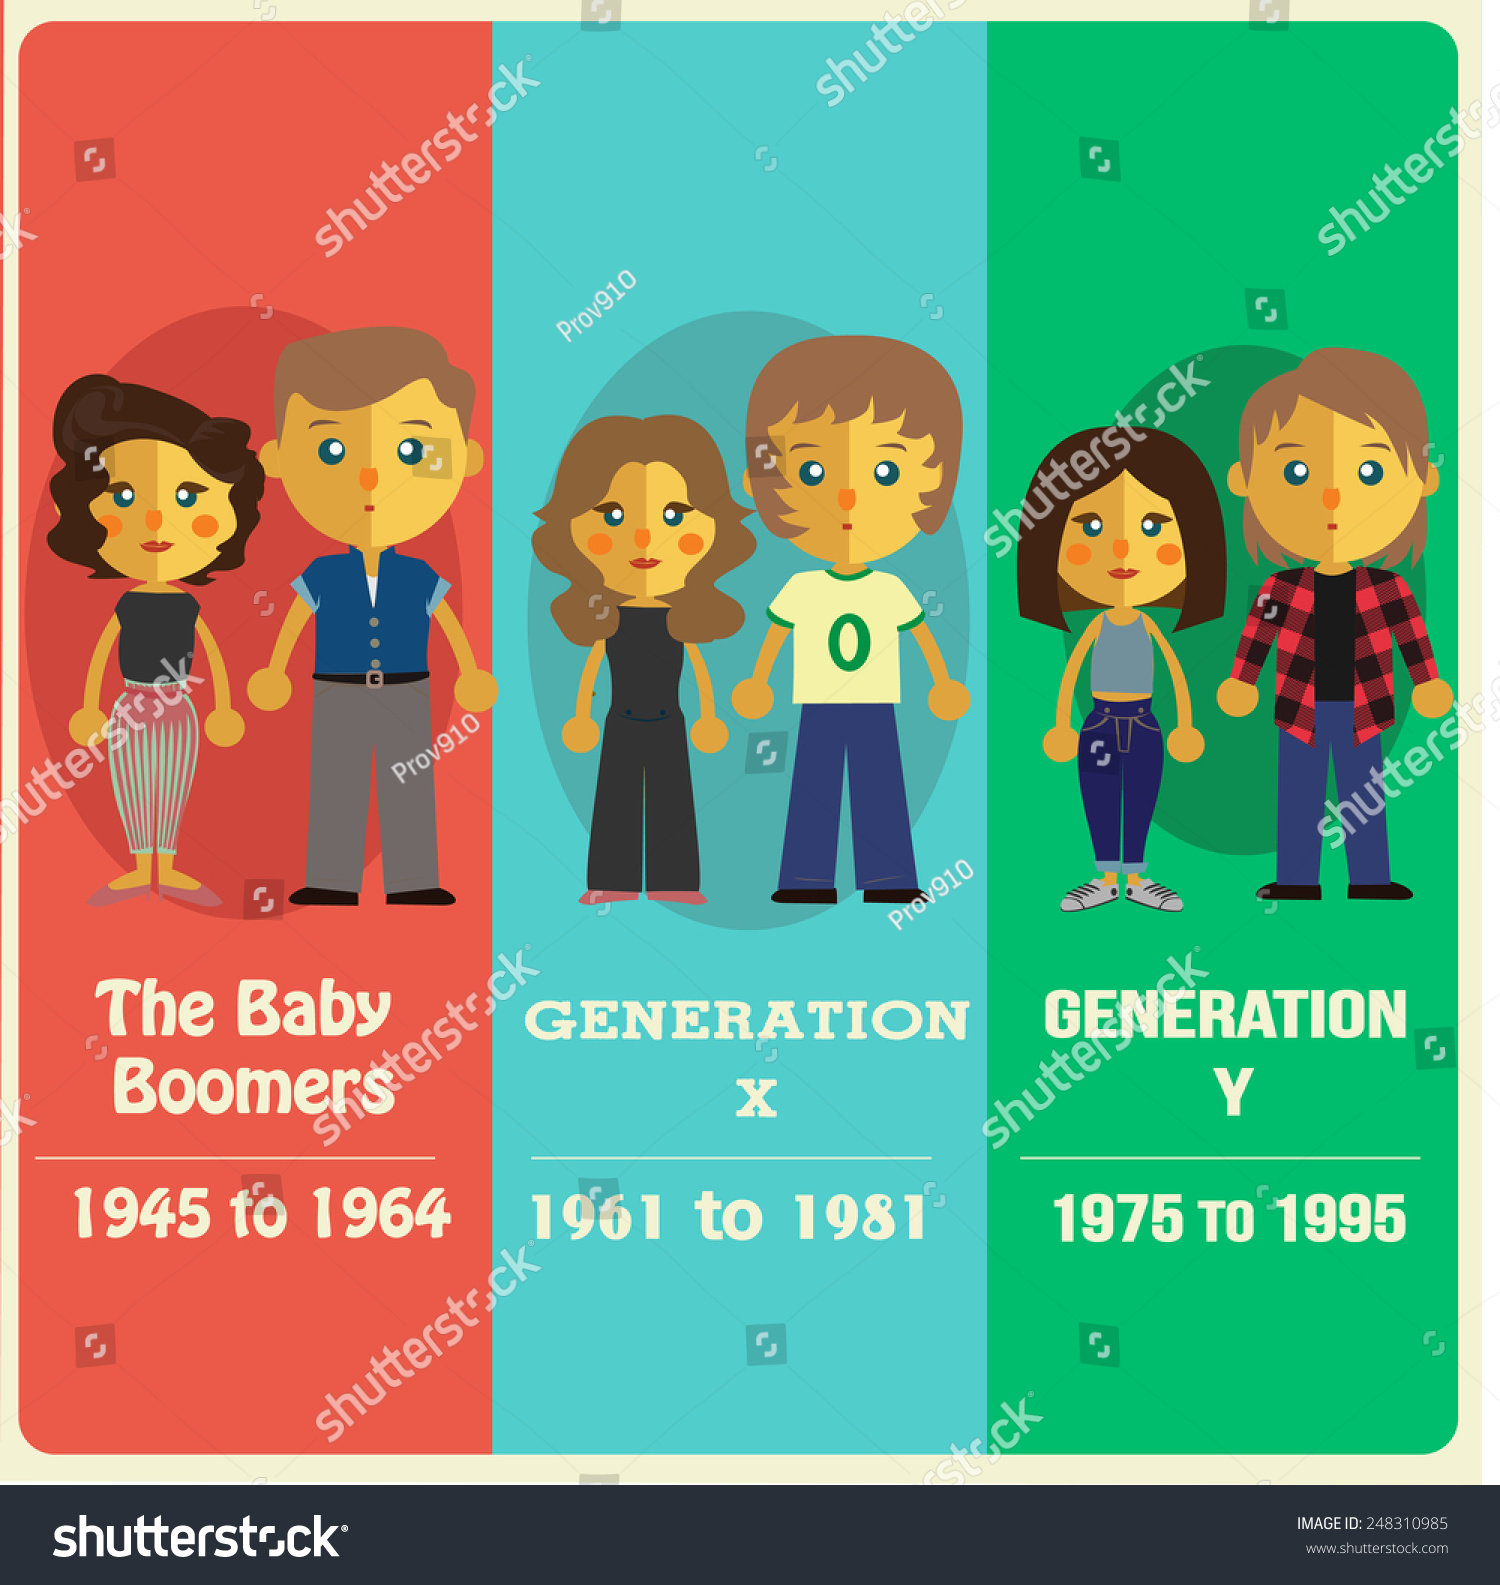 Boomer generation